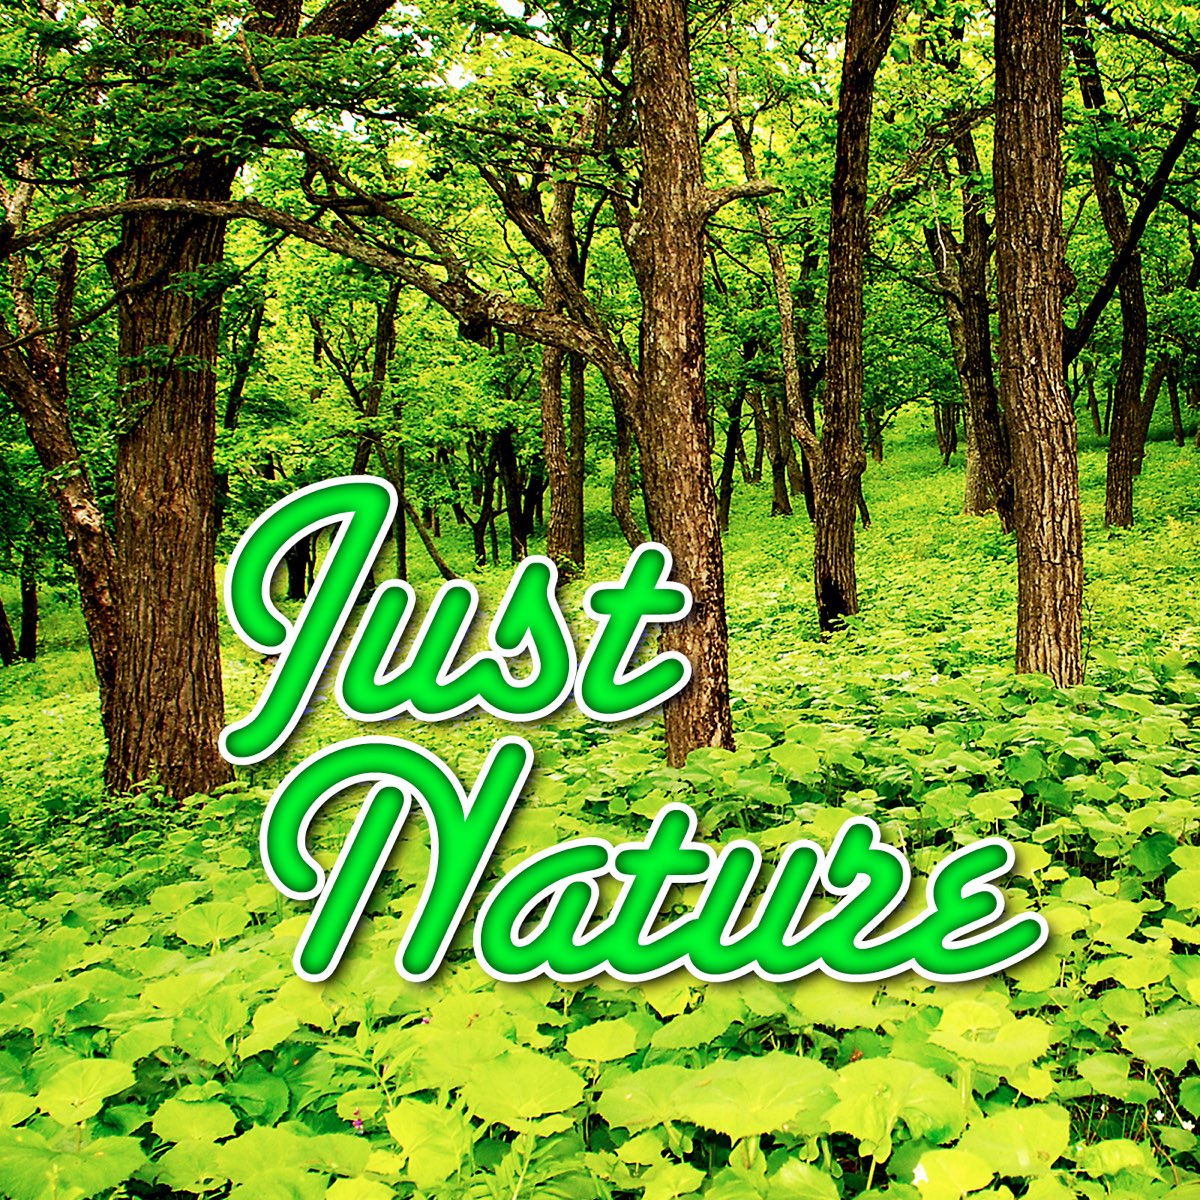 Natural last. Аудио звуки природы. Звуки природы обложка. Обложка альбома природа. Панель звуки природы.